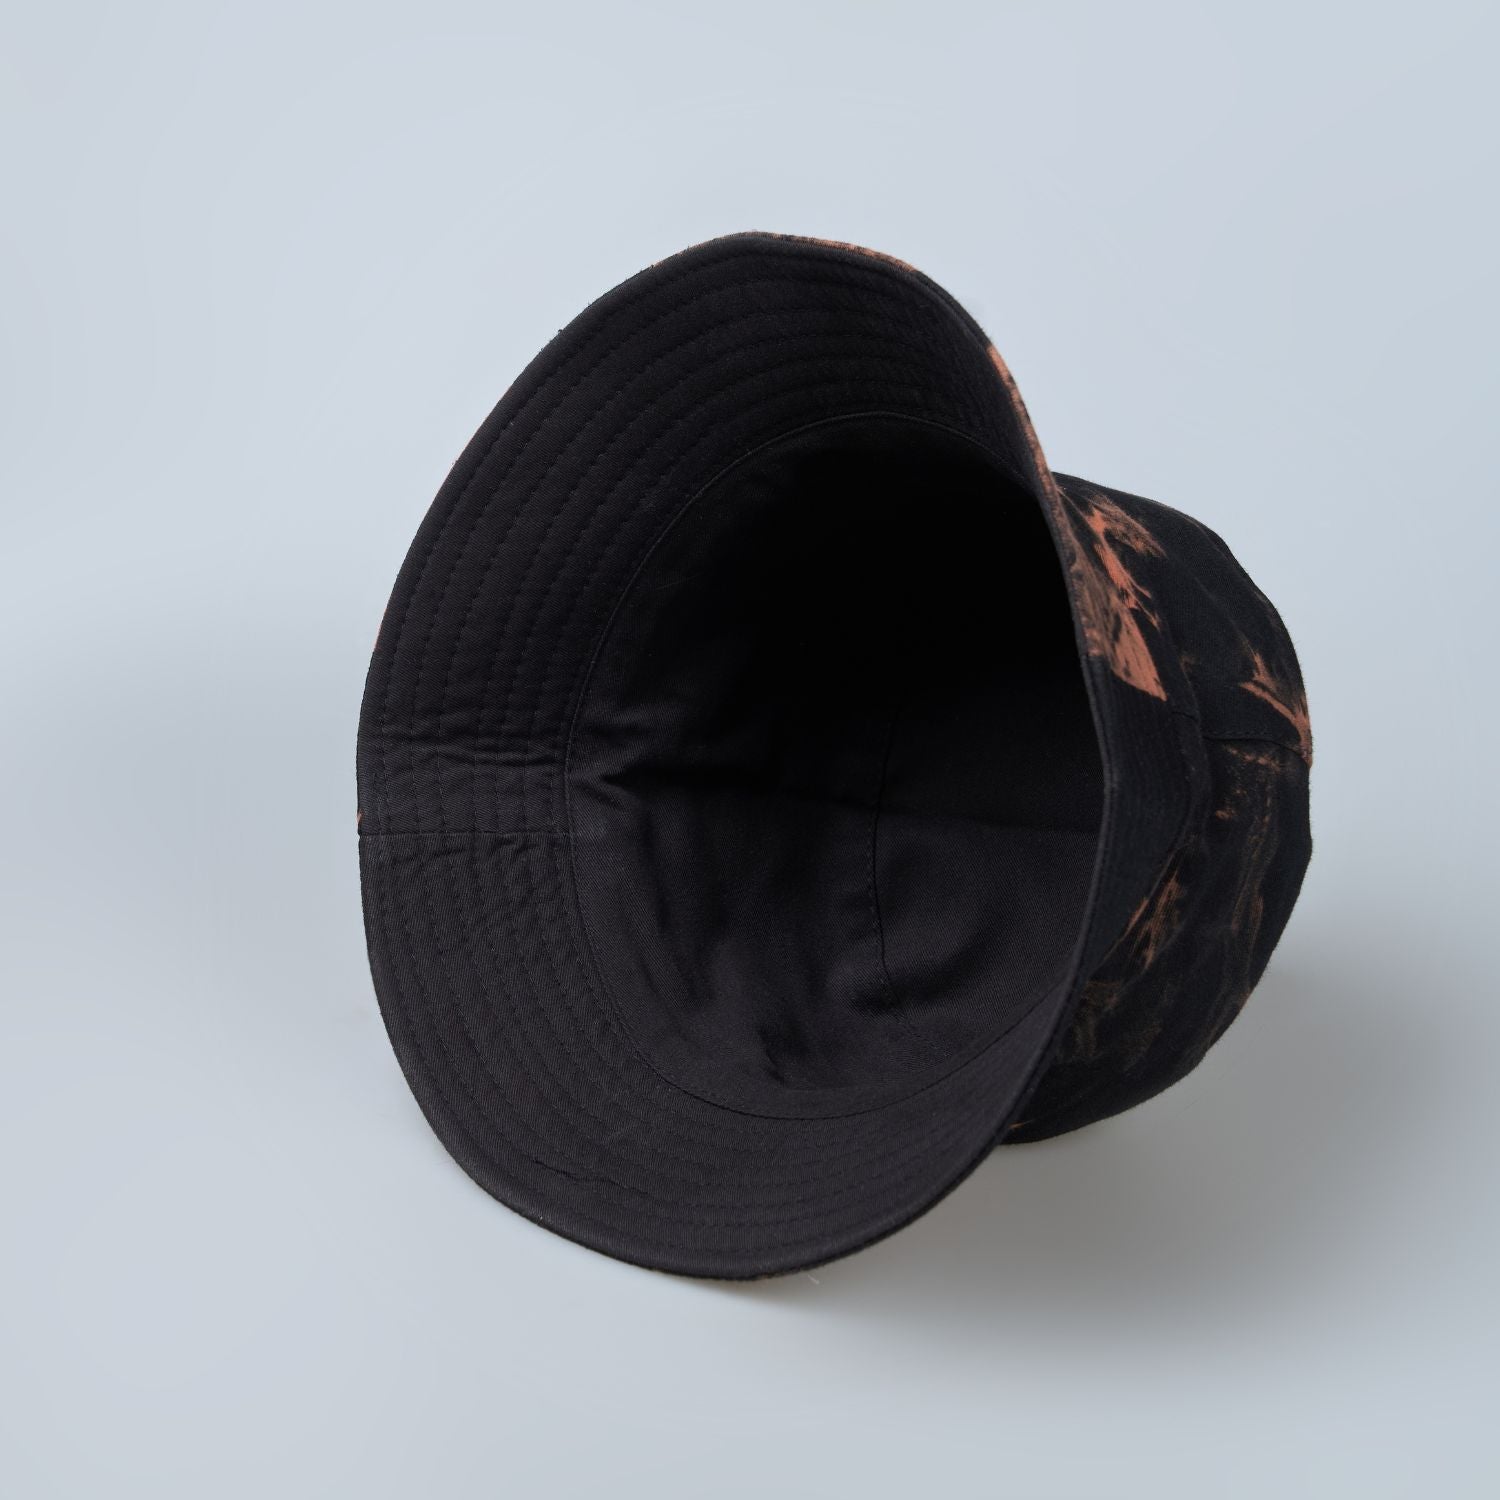 Black and orange colored, lightweight bucket hat for men, close up.